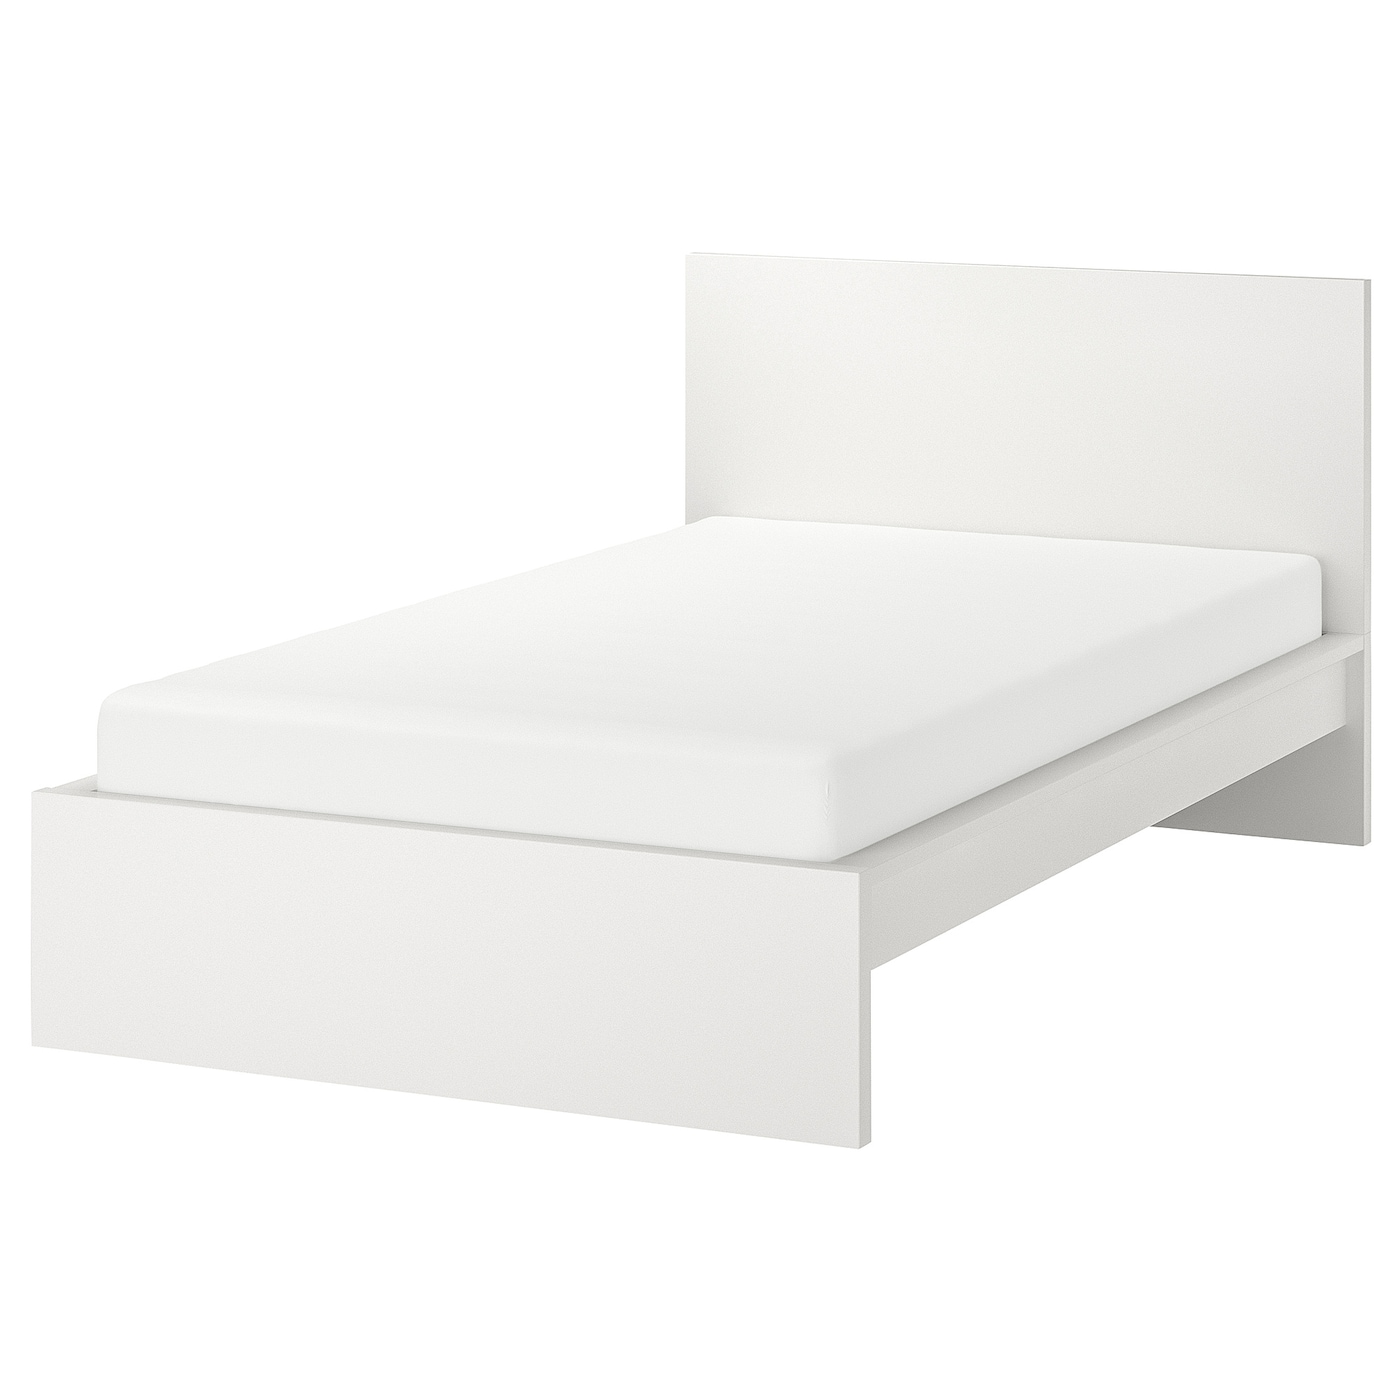 Каркас кровати - IKEA MALM, 200х120 см, белый, МАЛЬМ ИКЕА